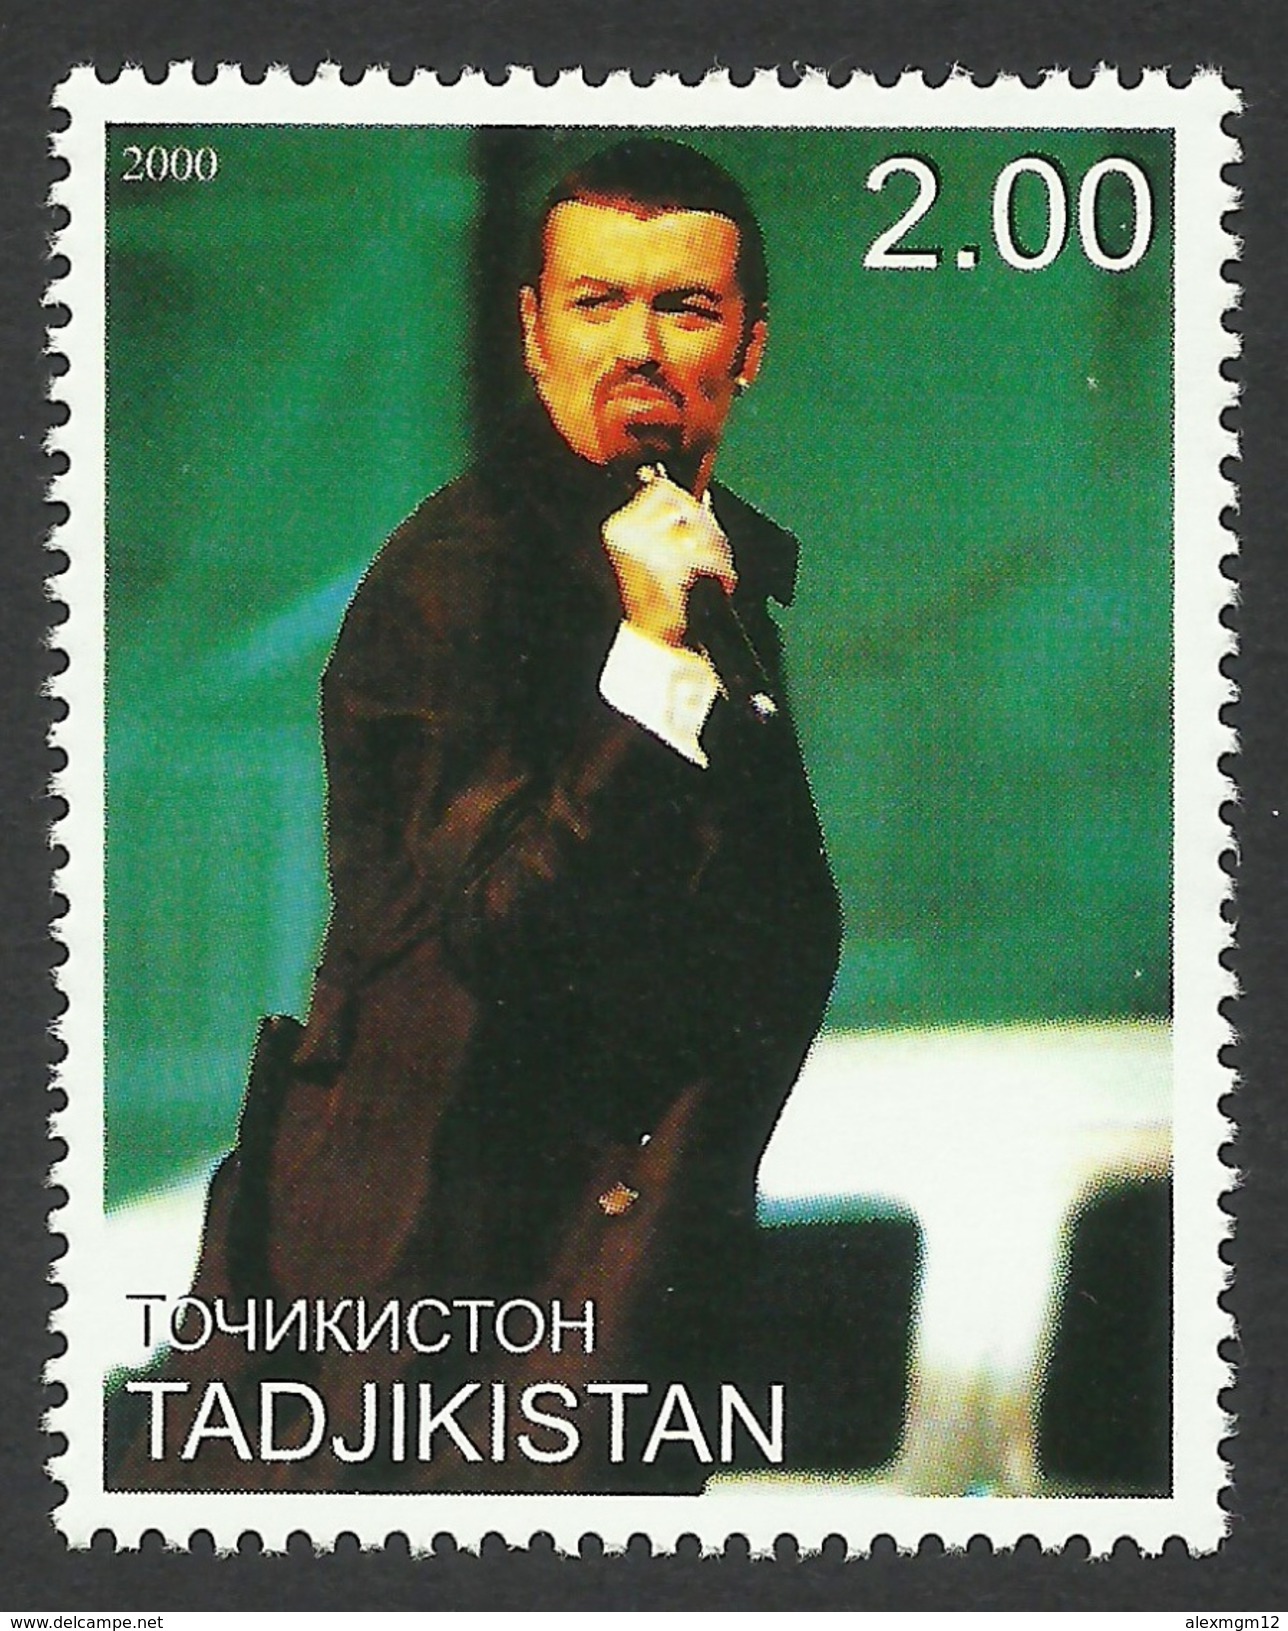 Tajikistan, 2 S. 2000, George Michael, MNH - Tajikistan